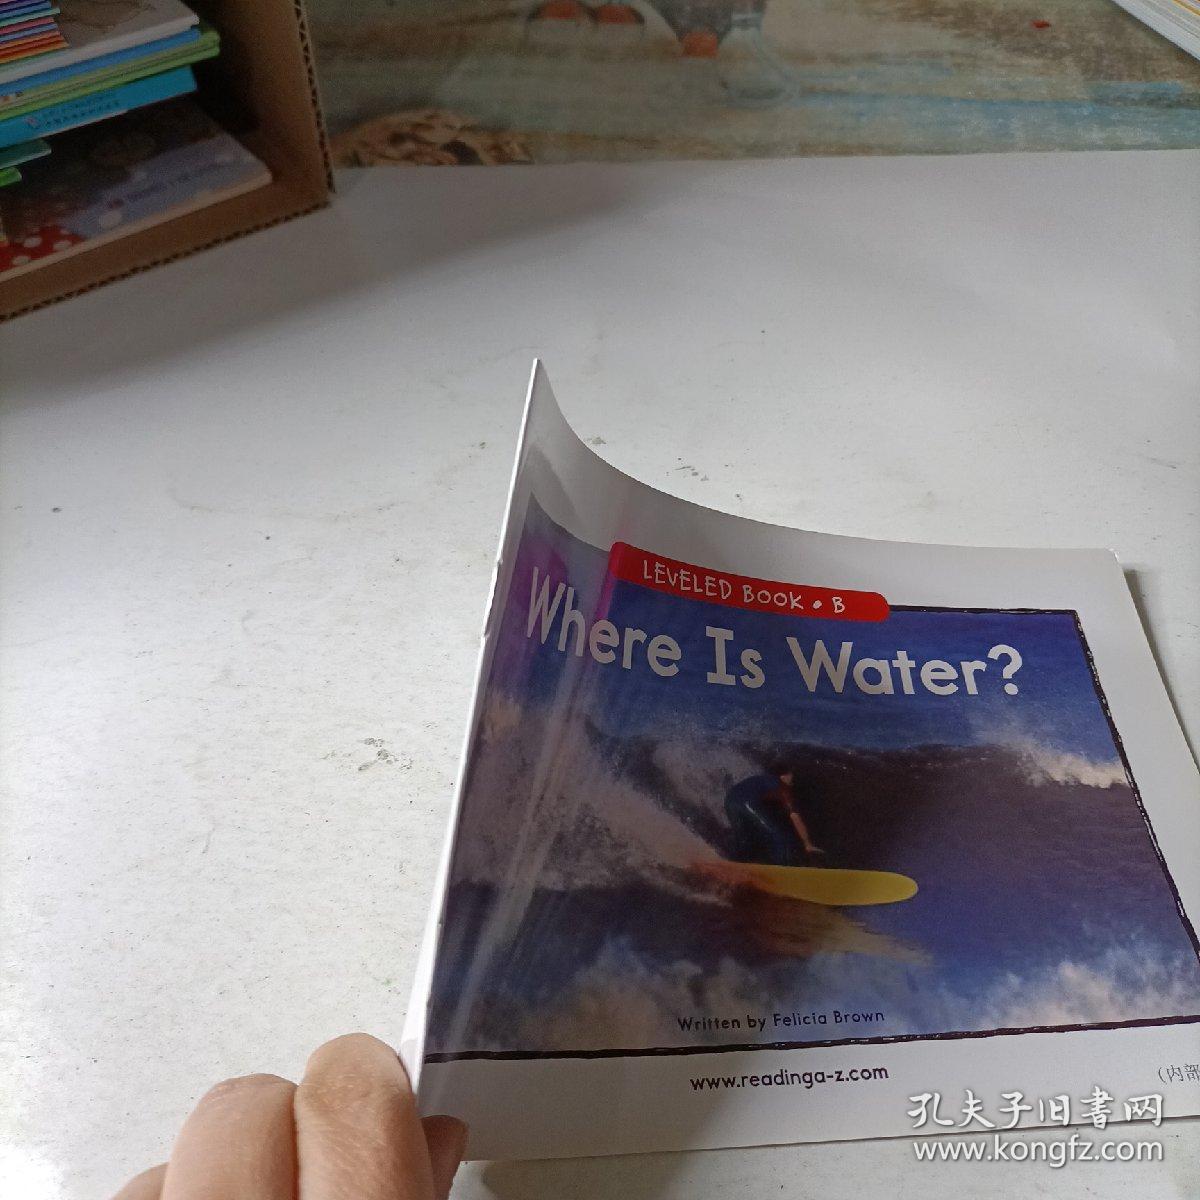 ReadingA-Z    where  is  water